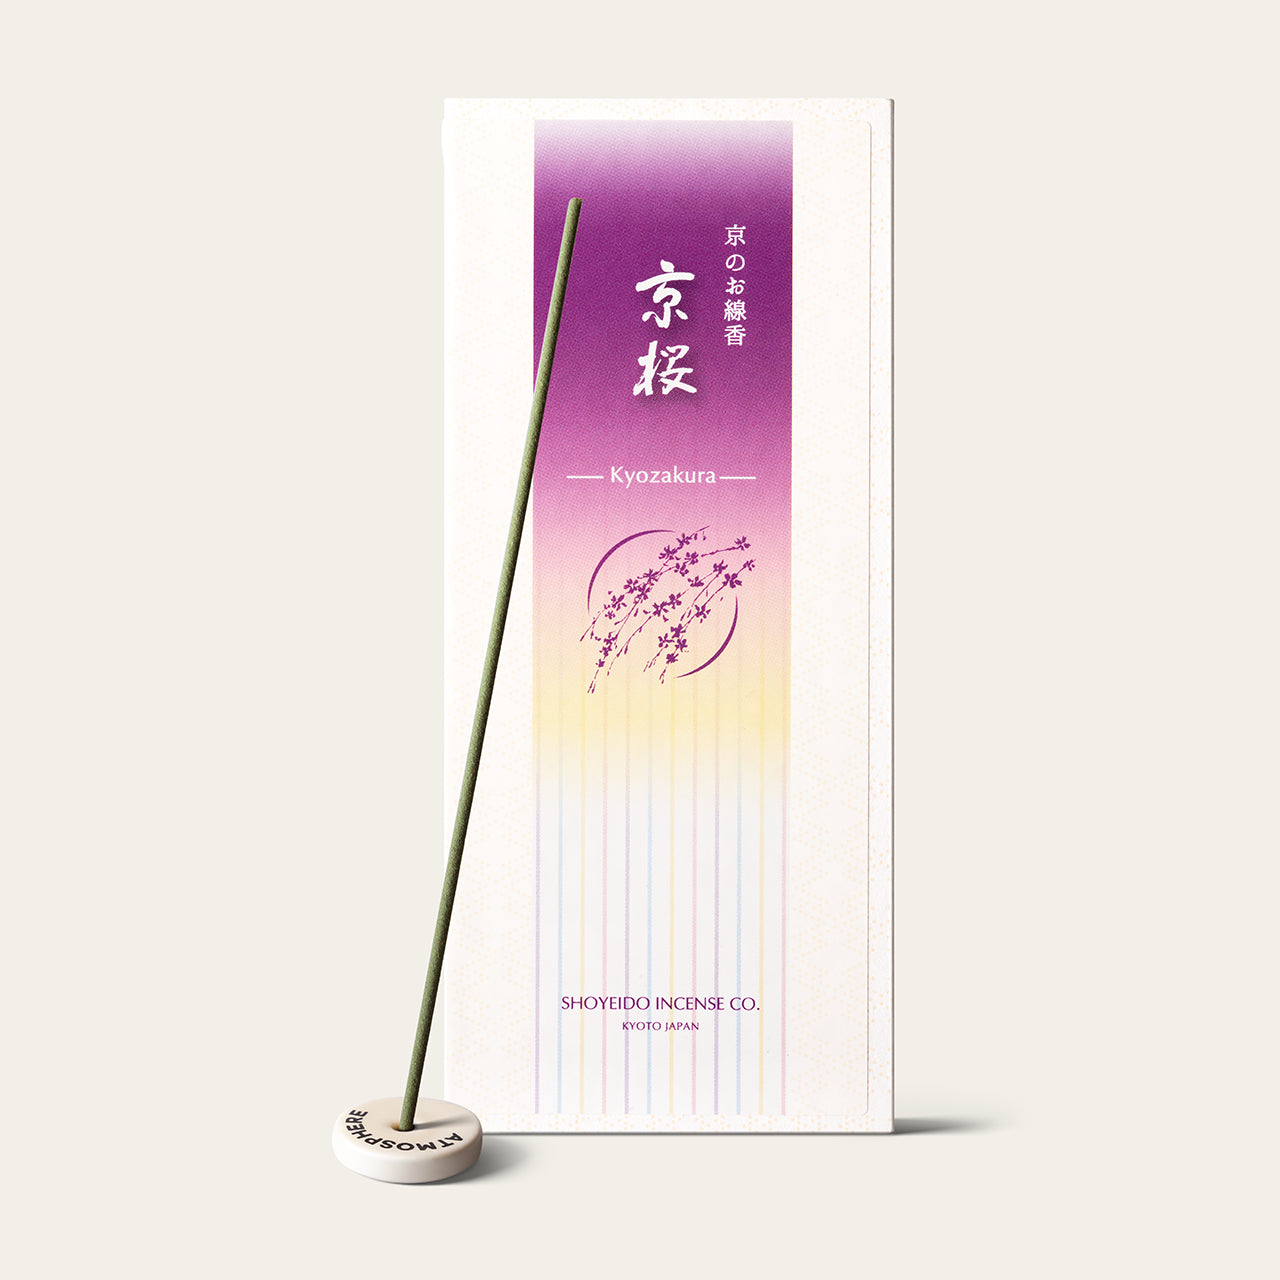 Shoyeido Daily Kyoto Cherry Blossoms Kyozakura Japanese incense sticks (175 sticks) with Atmosphere ceramic incense holder